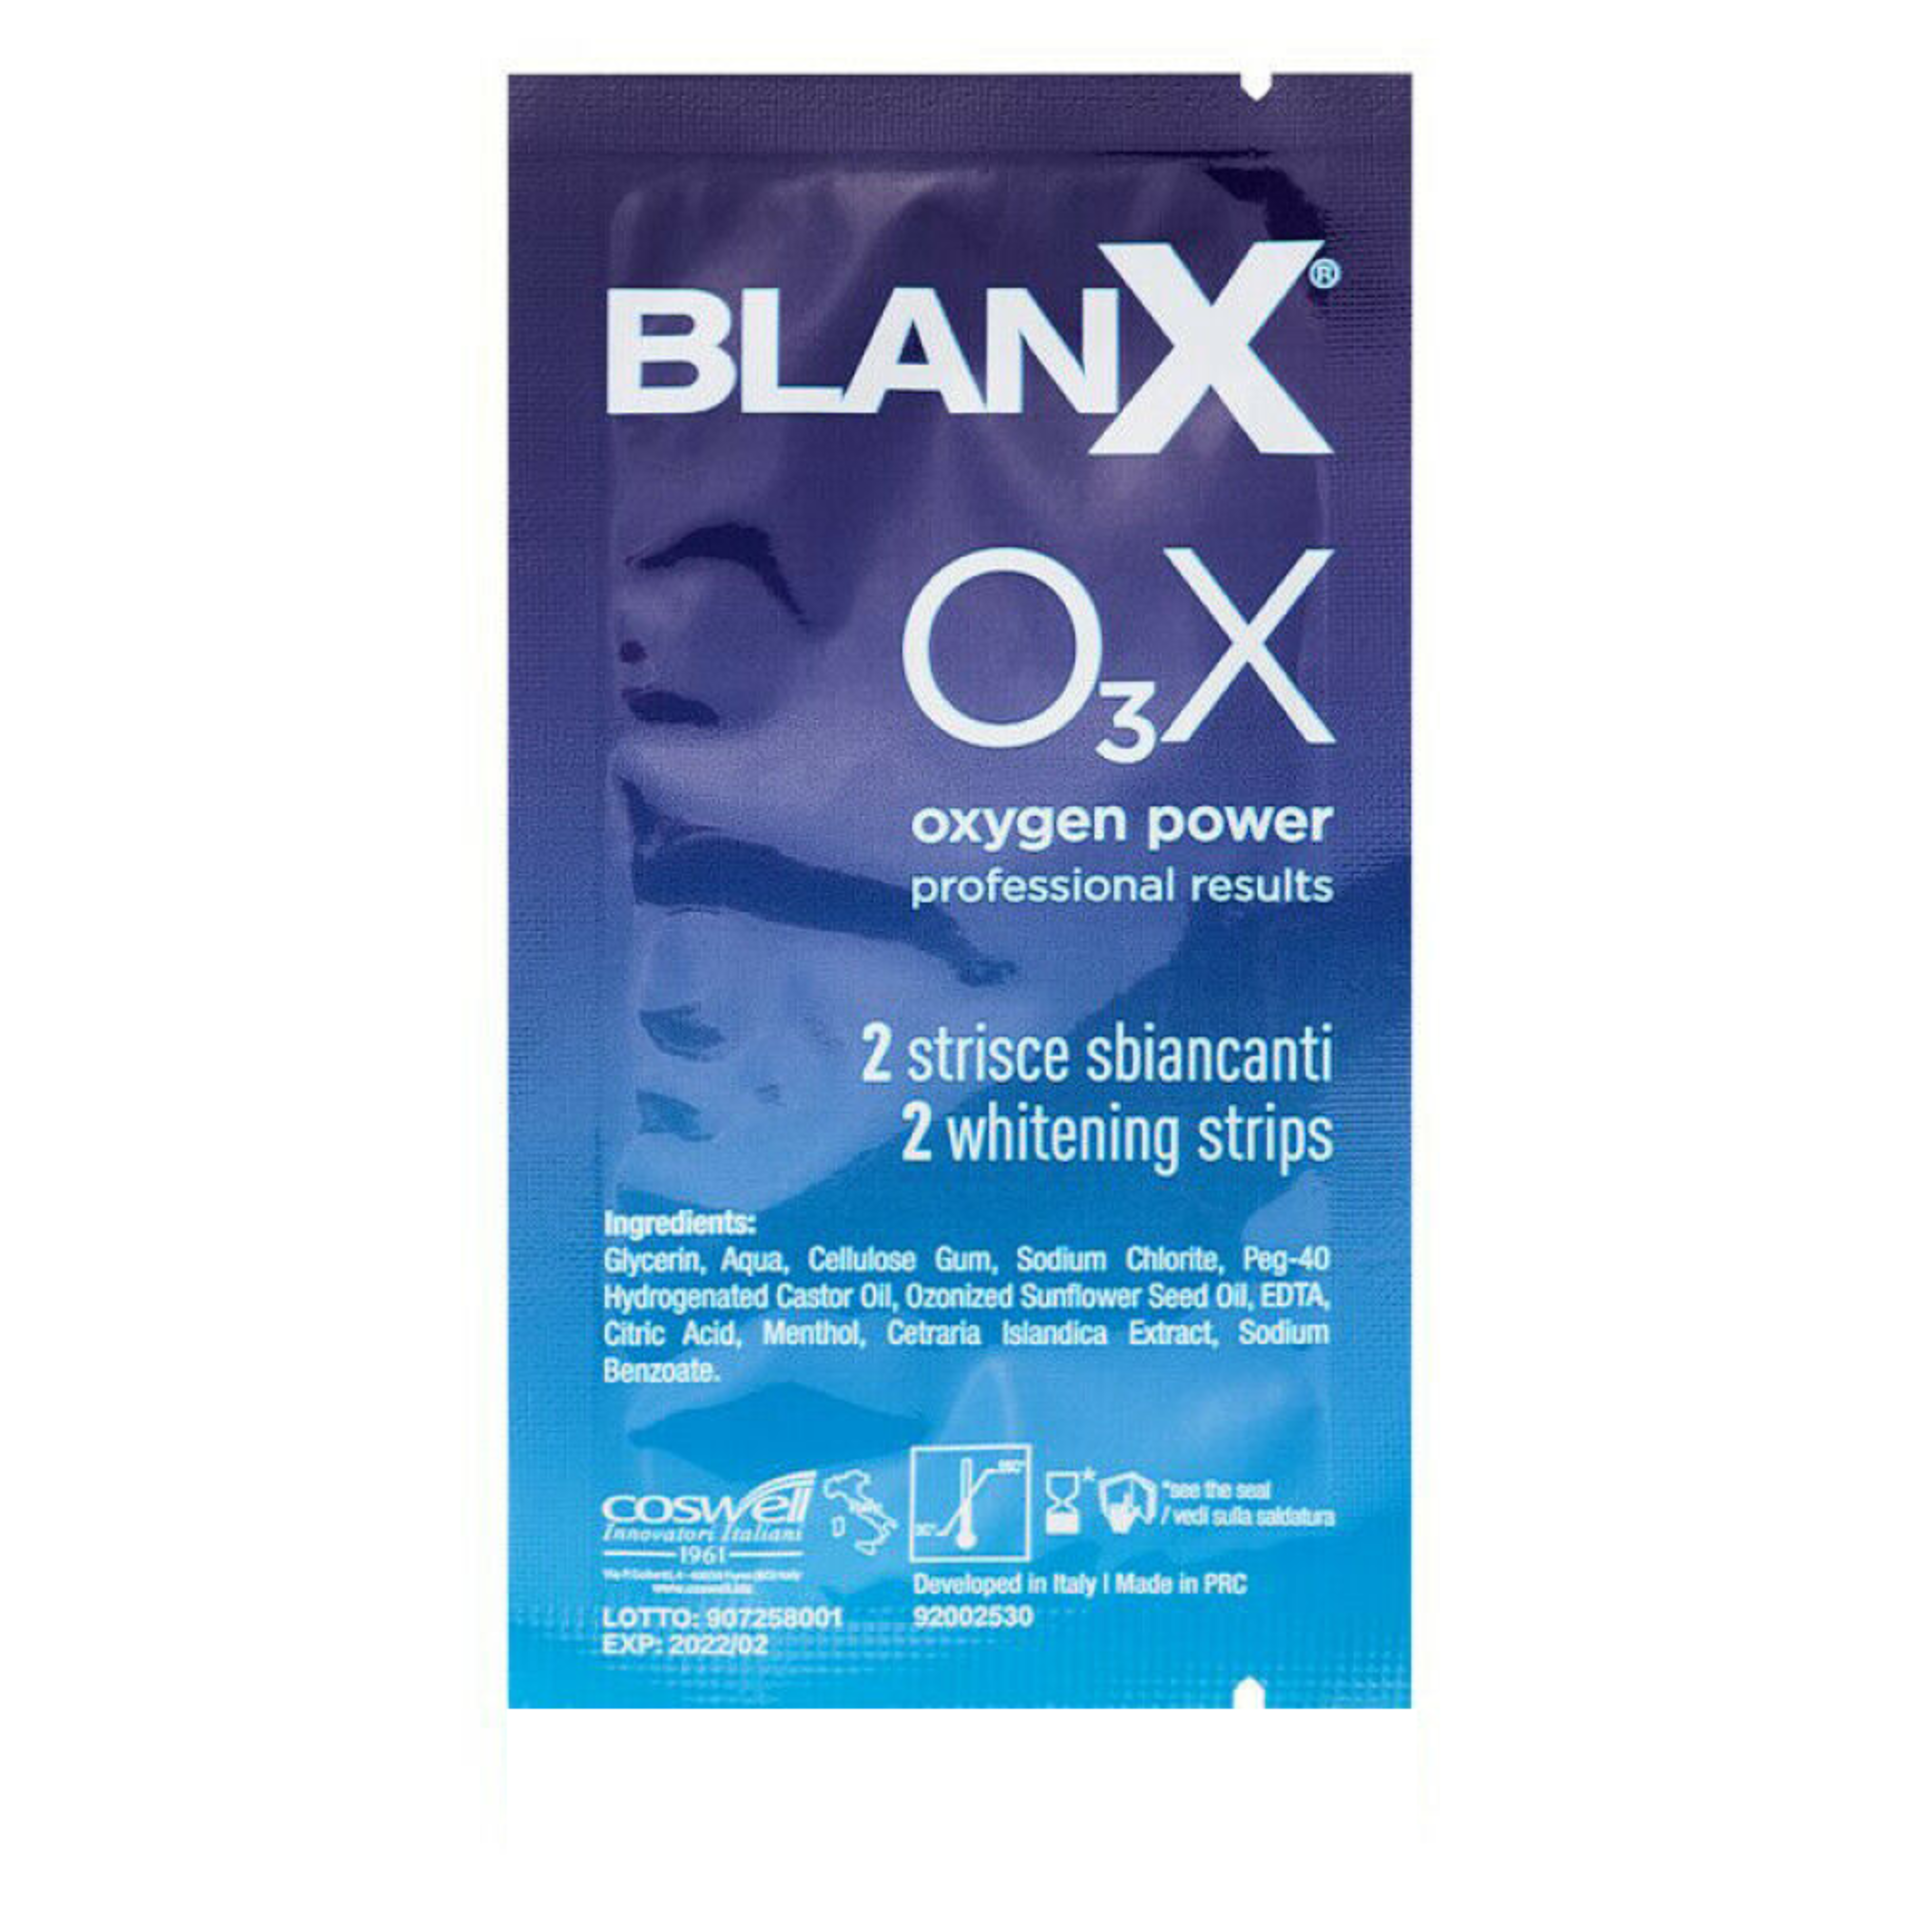 Blanx flash white strips oxygen power o3x x 3 rrp £75 - Image 2 of 2